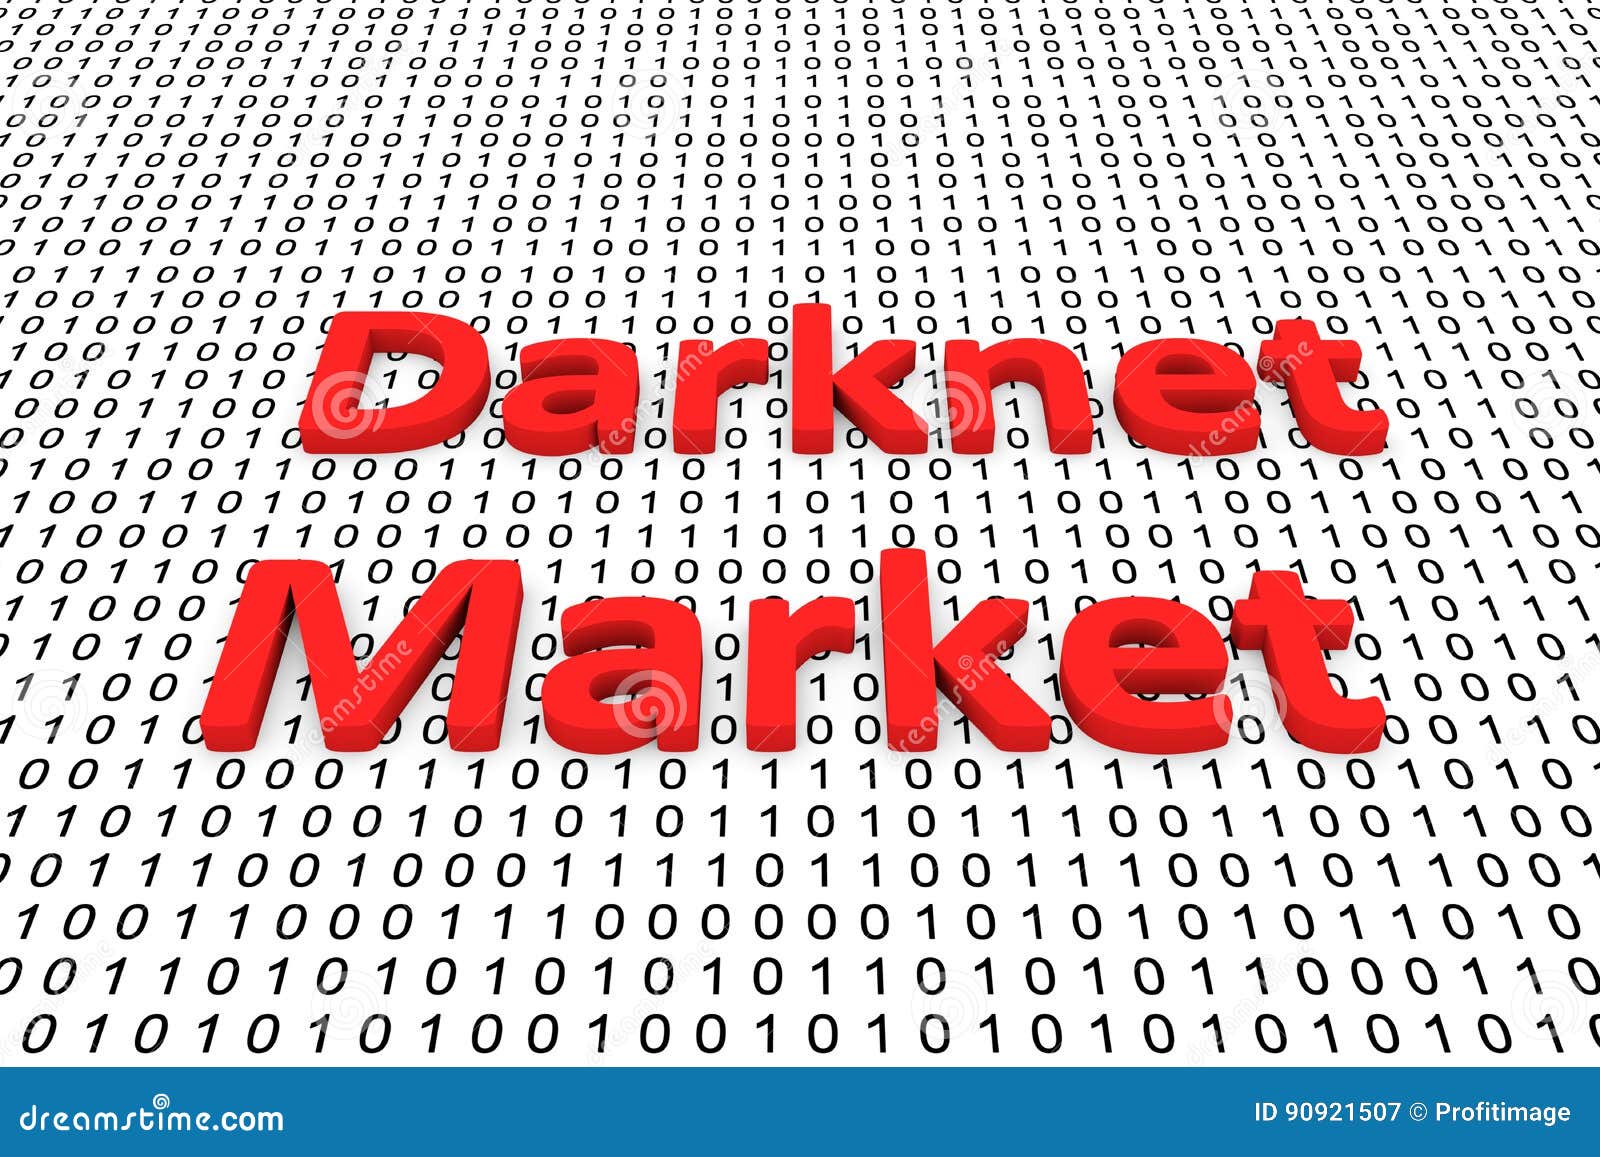 Bohemia darknet market